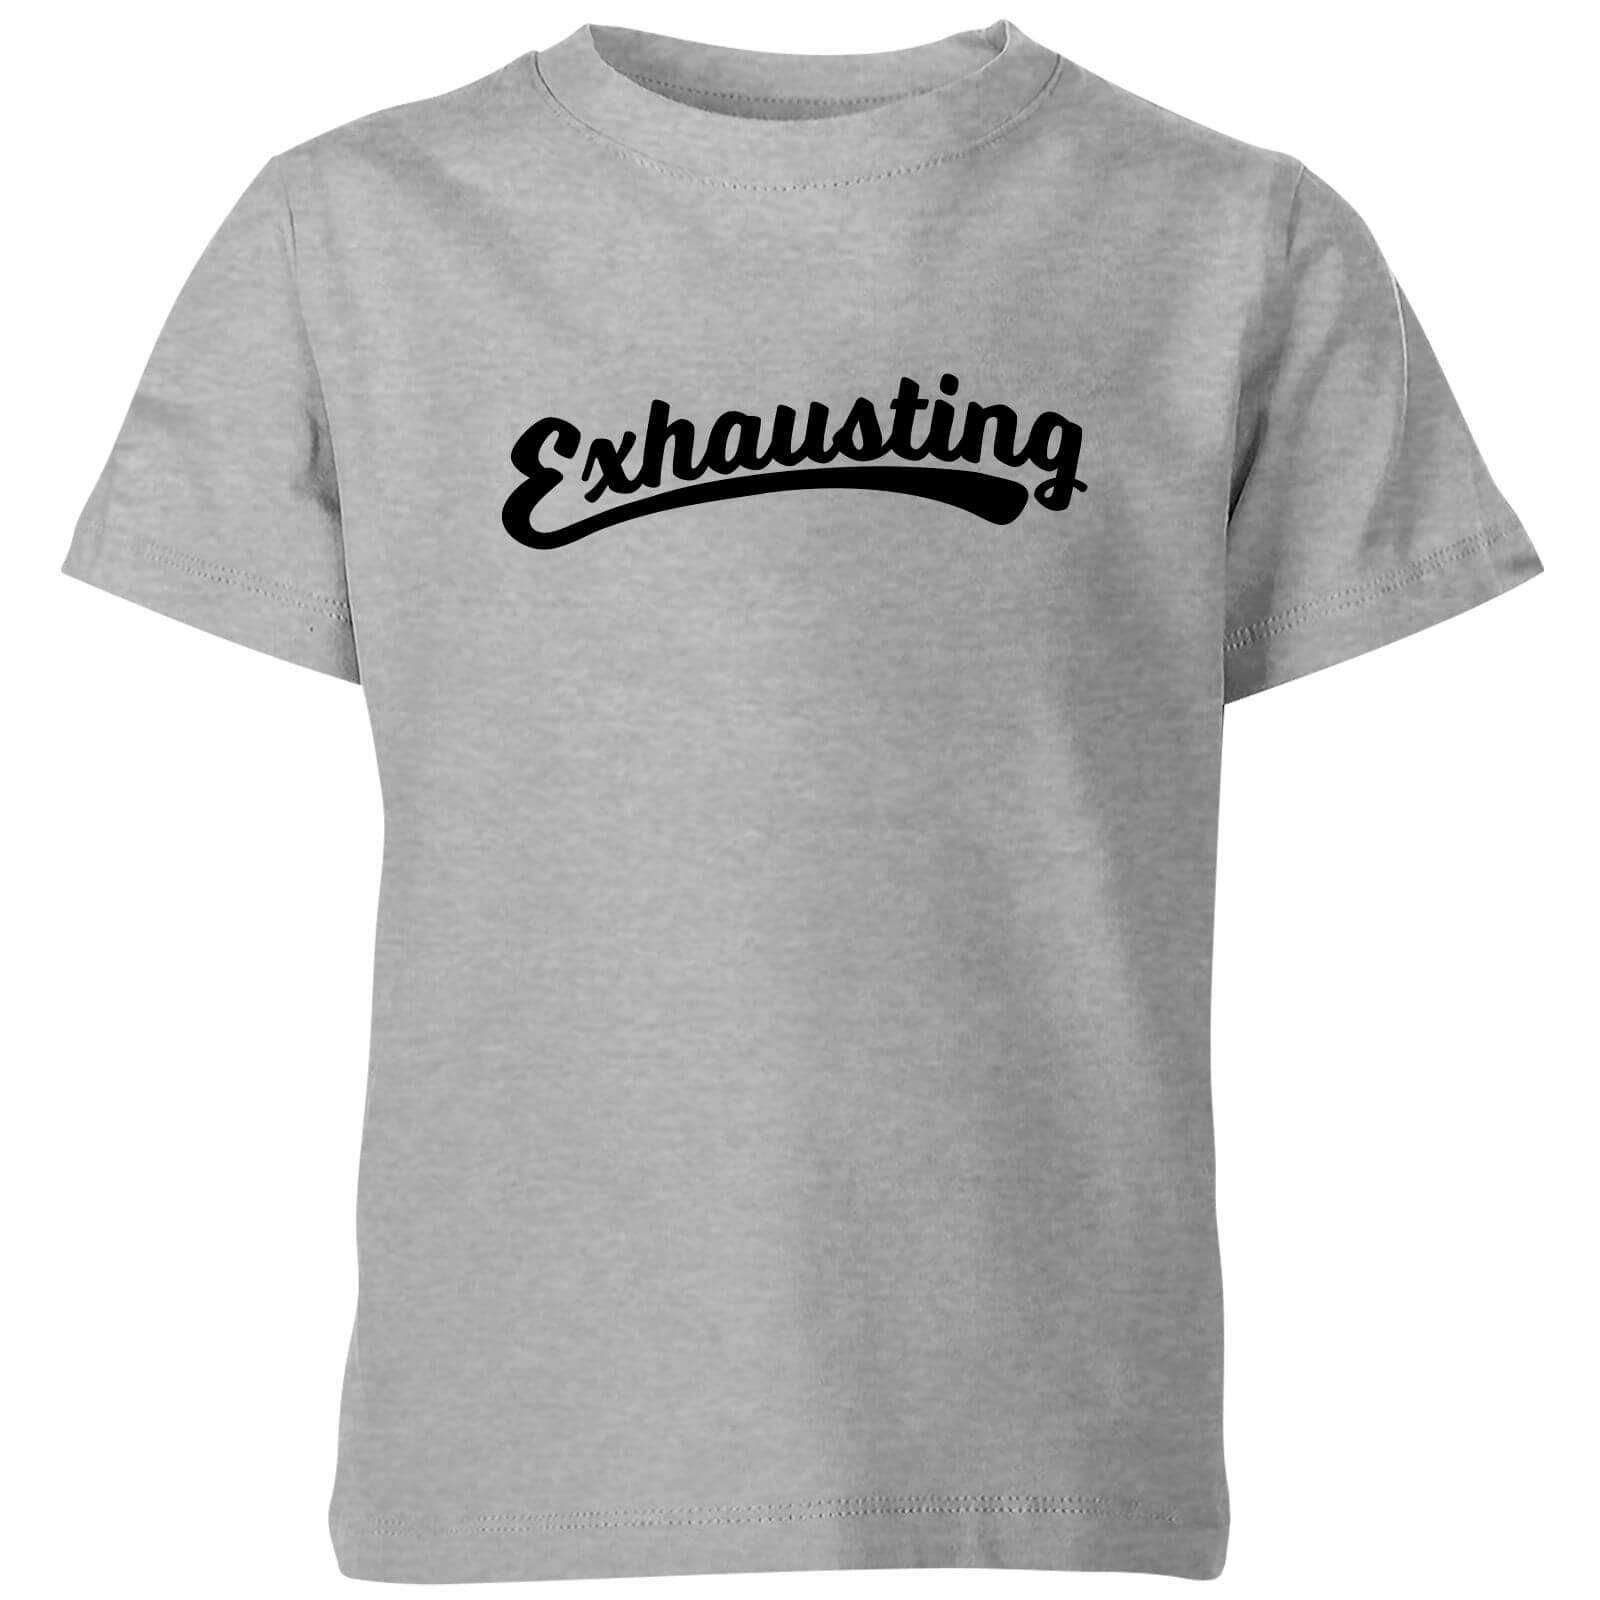 Exhausting Kids' T-Shirt - Grey - 3-4 Years - Grey